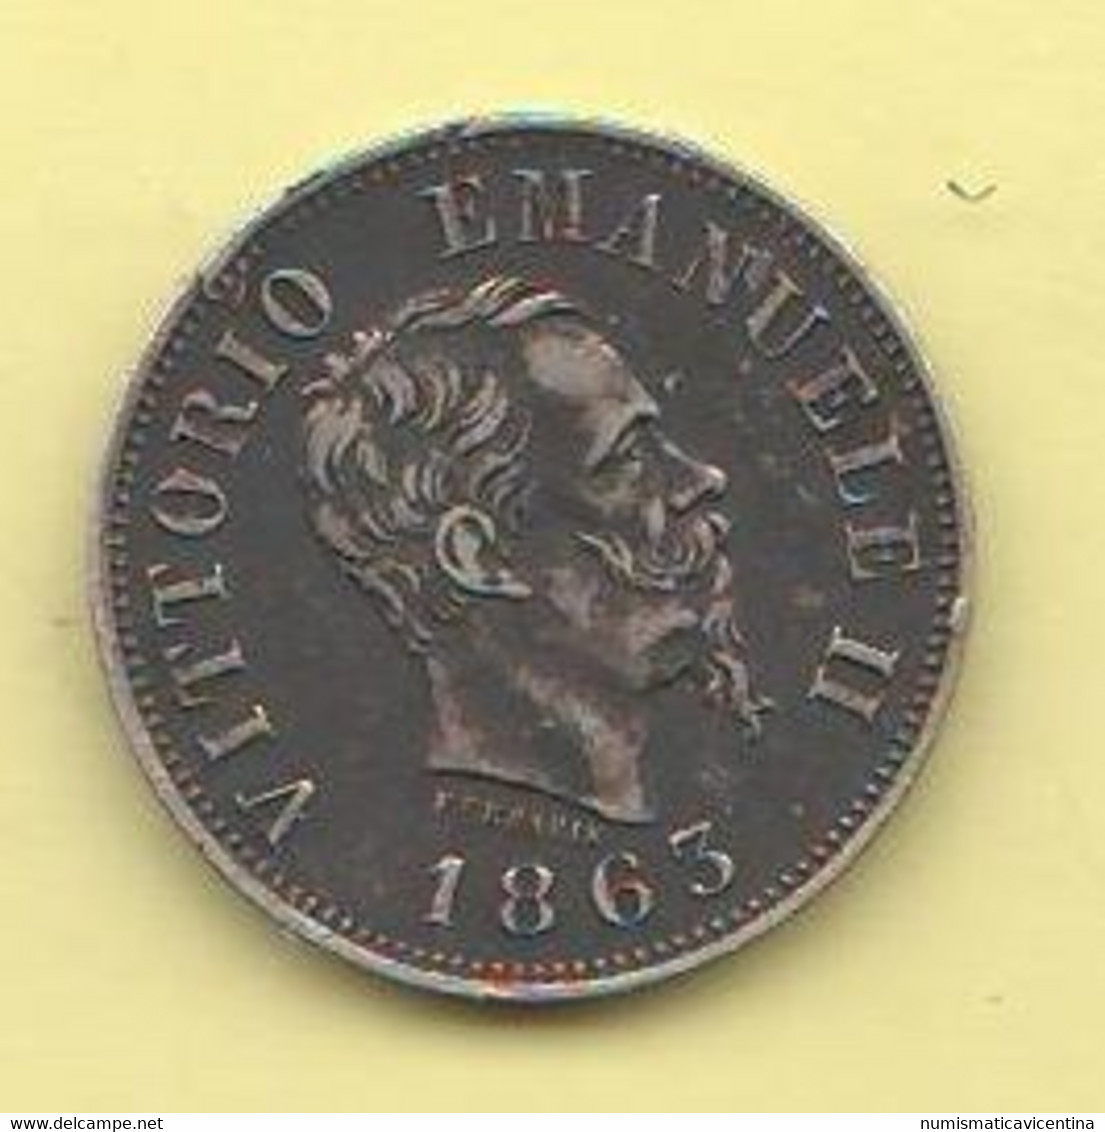 Italia Regno 50 Centesimi 1863 Milano Silver Coin - 1861-1878 : Víctor Emmanuel II